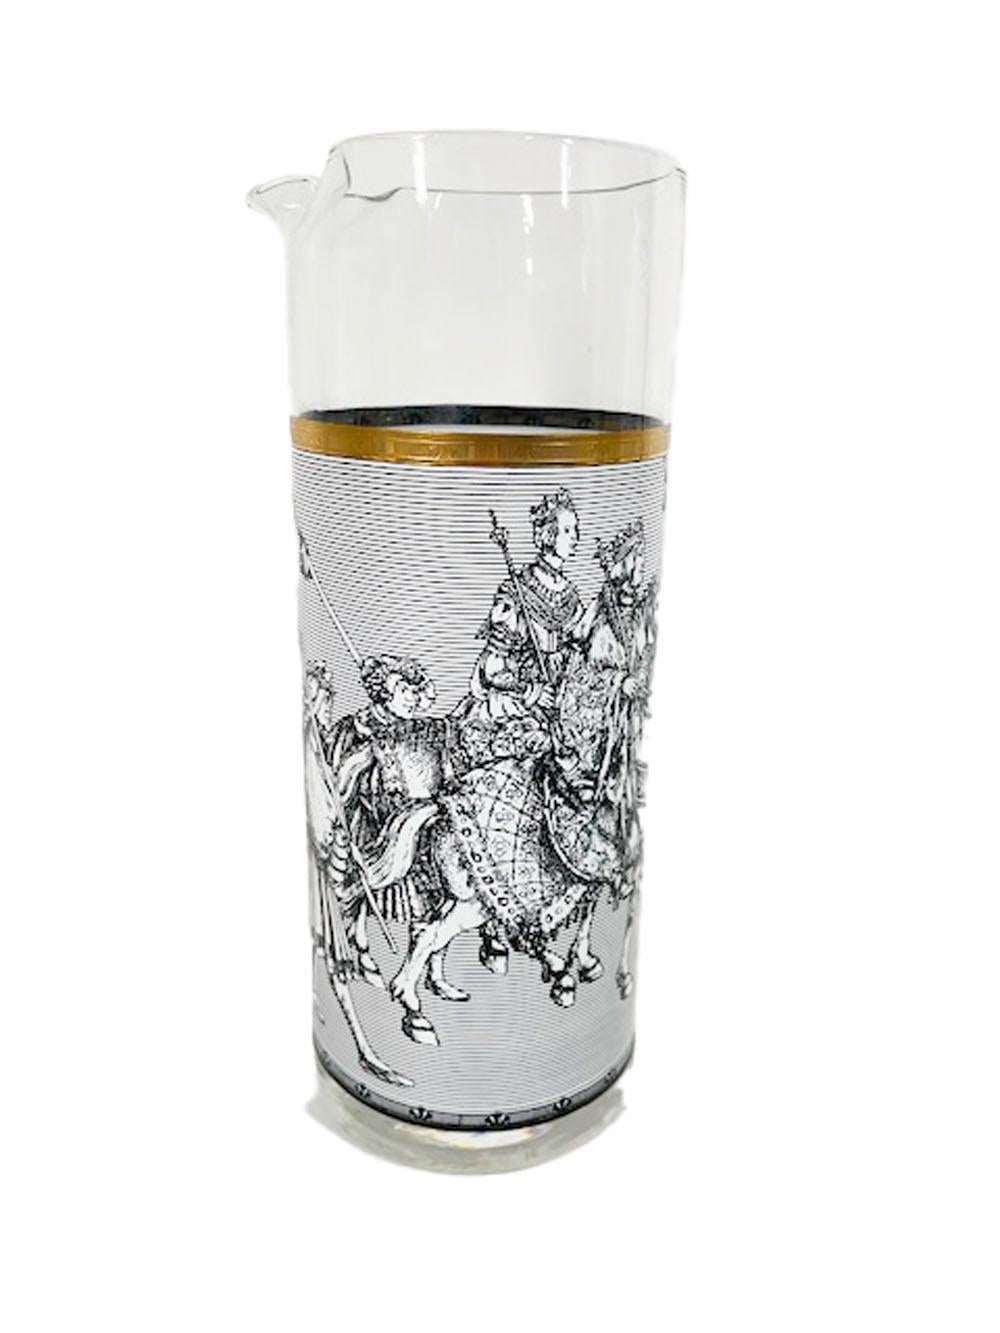 Vintage Cera Glassware Camelot Pattern Cocktail Set in Black and White For Sale 5